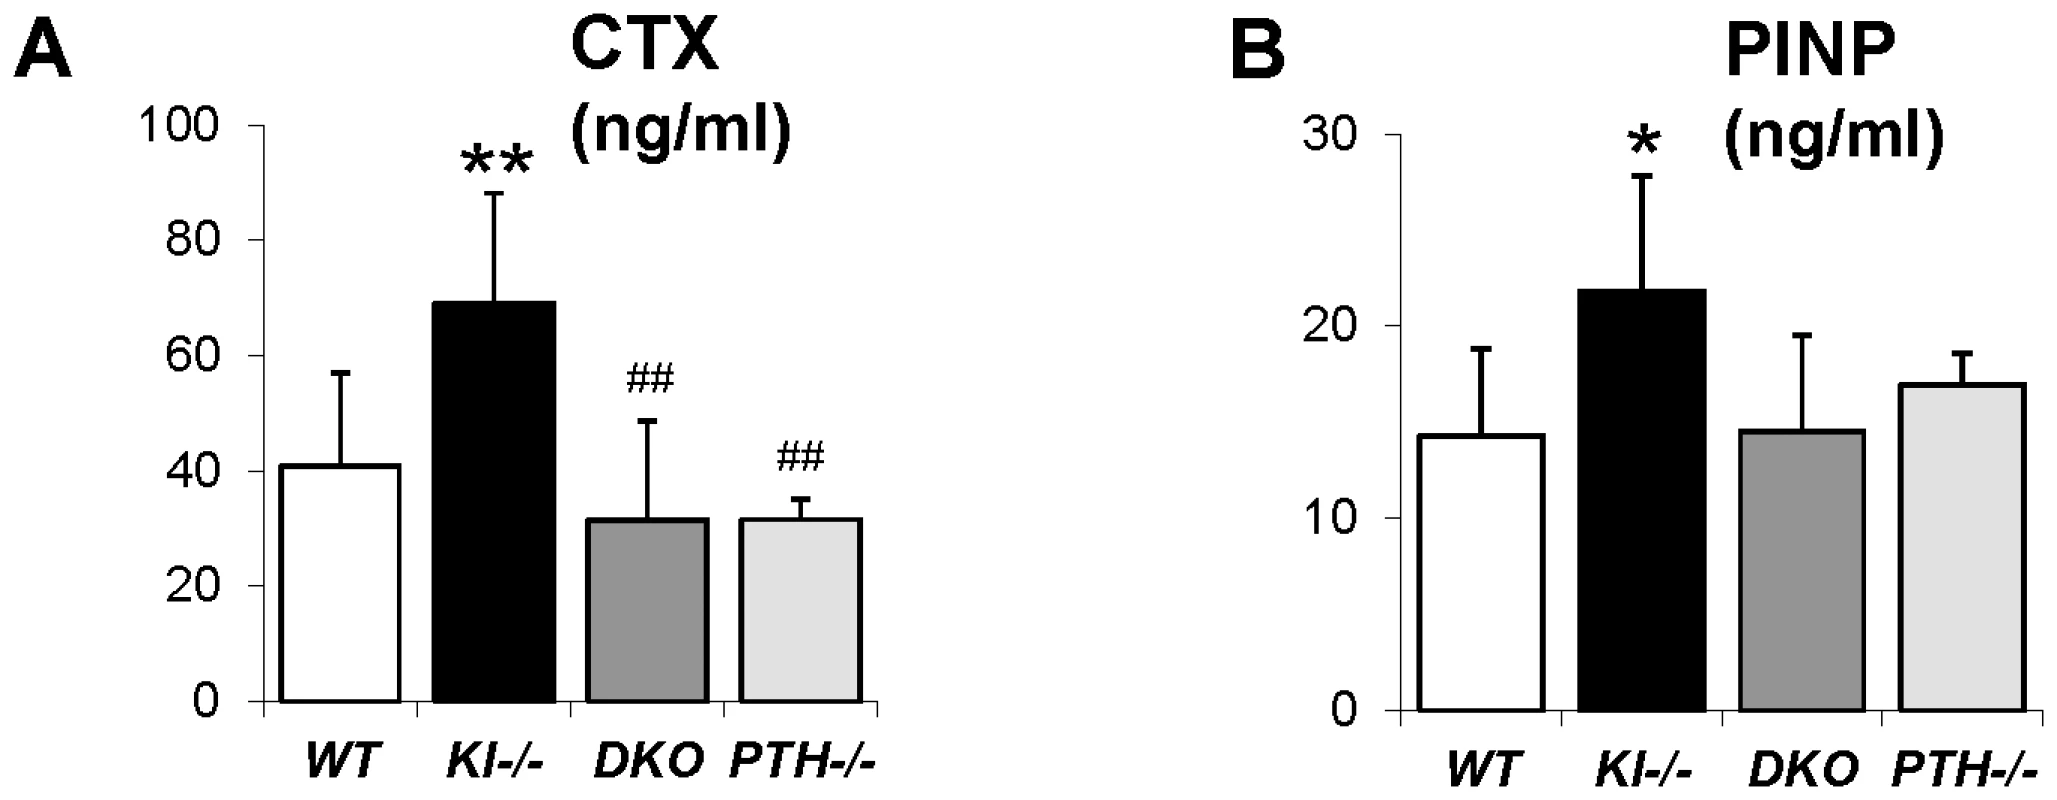 Measurement of serum CTX and PINP.